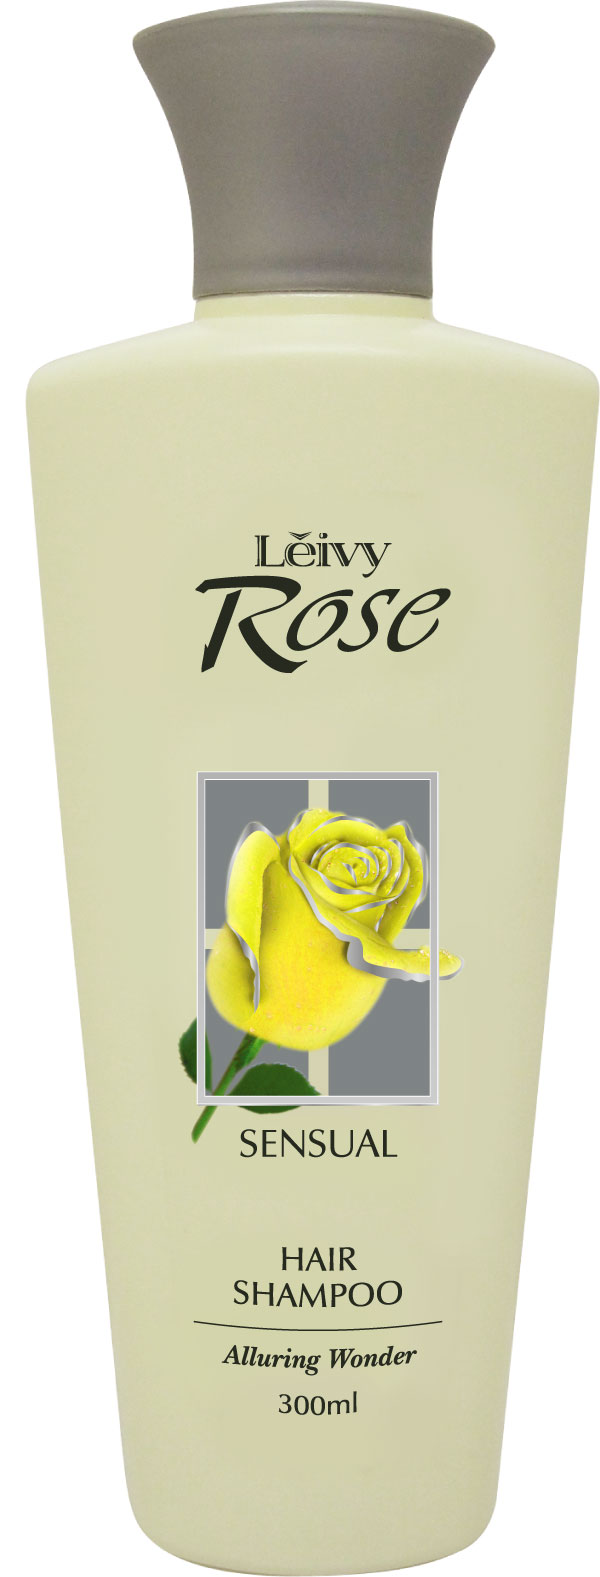 Leivy Rose Sensual - Hair Shampoo (300ml)